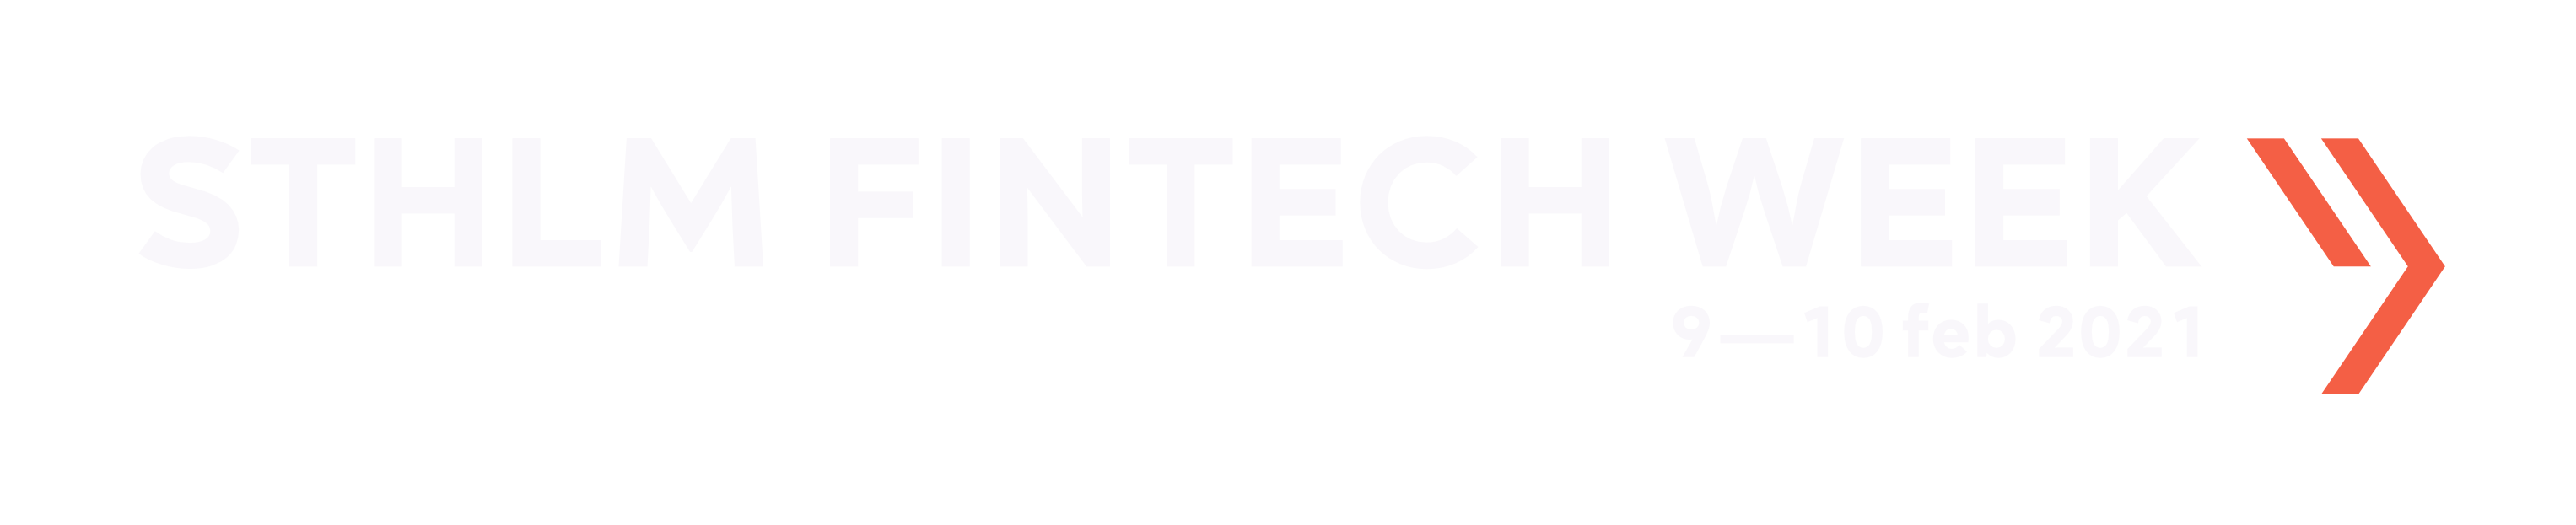 Stockholm Fintech Week Logo